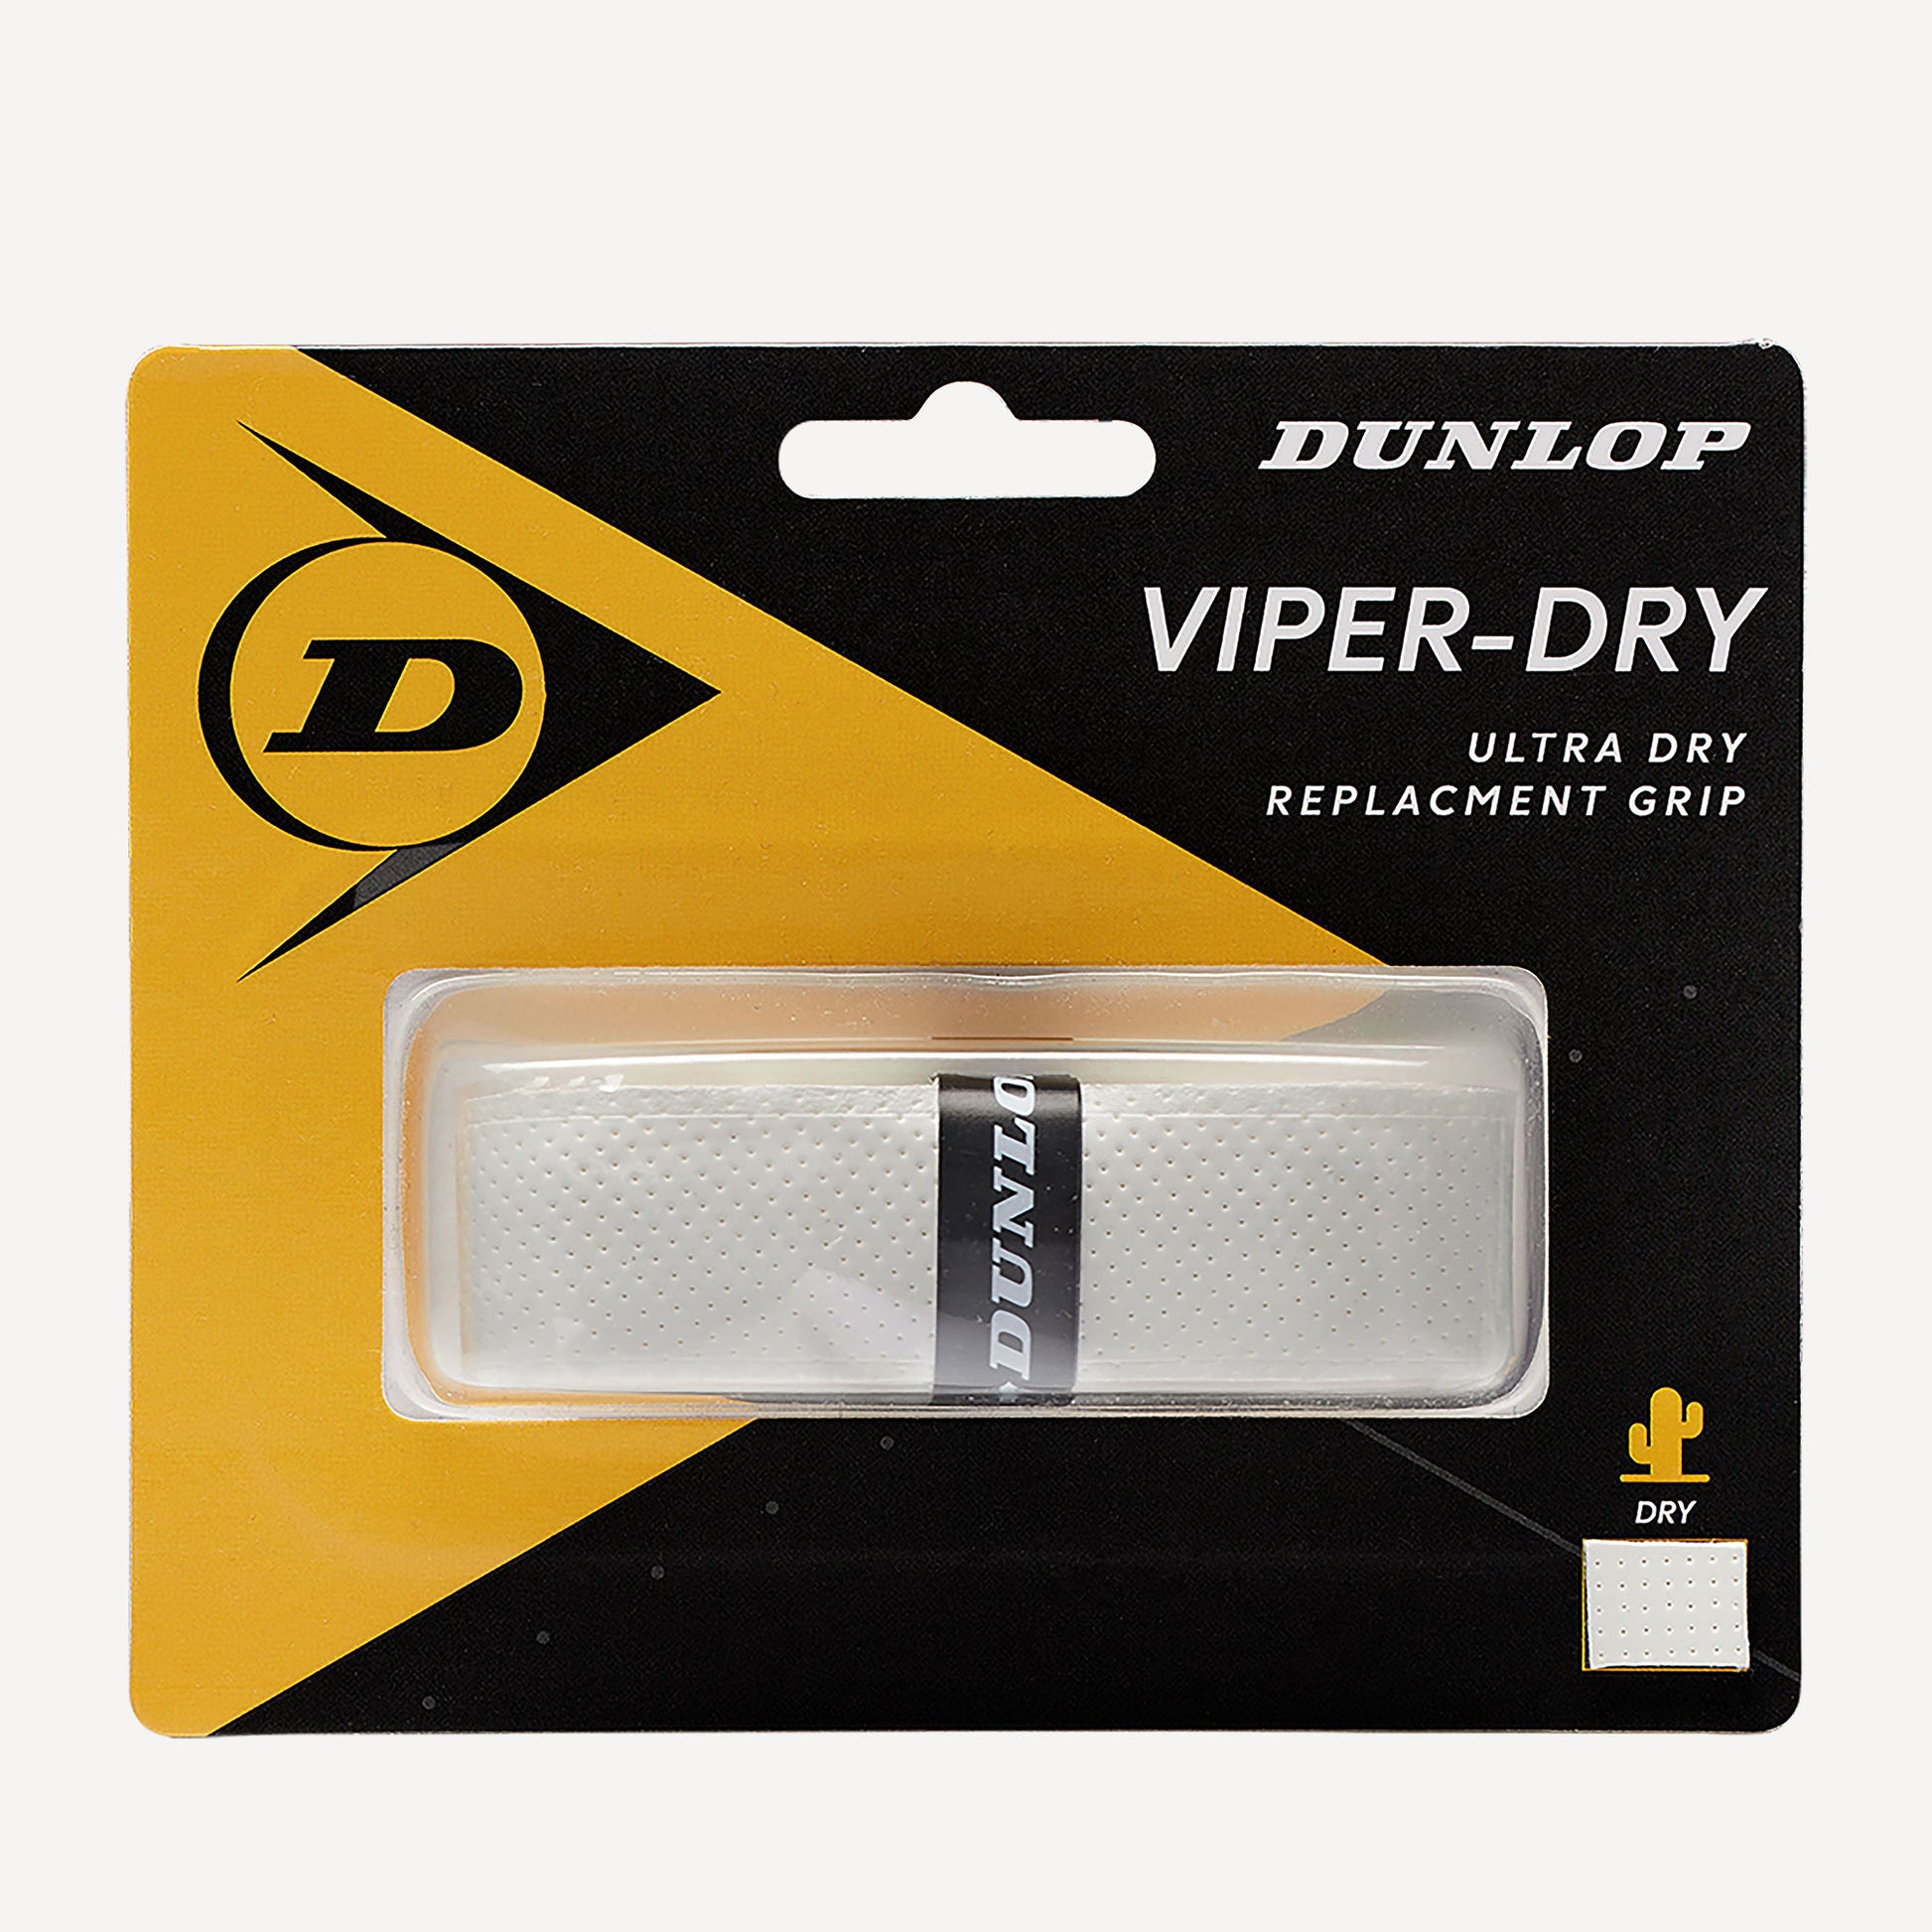 Dunlop Viper-Dry Tennis Replacement Grip 1